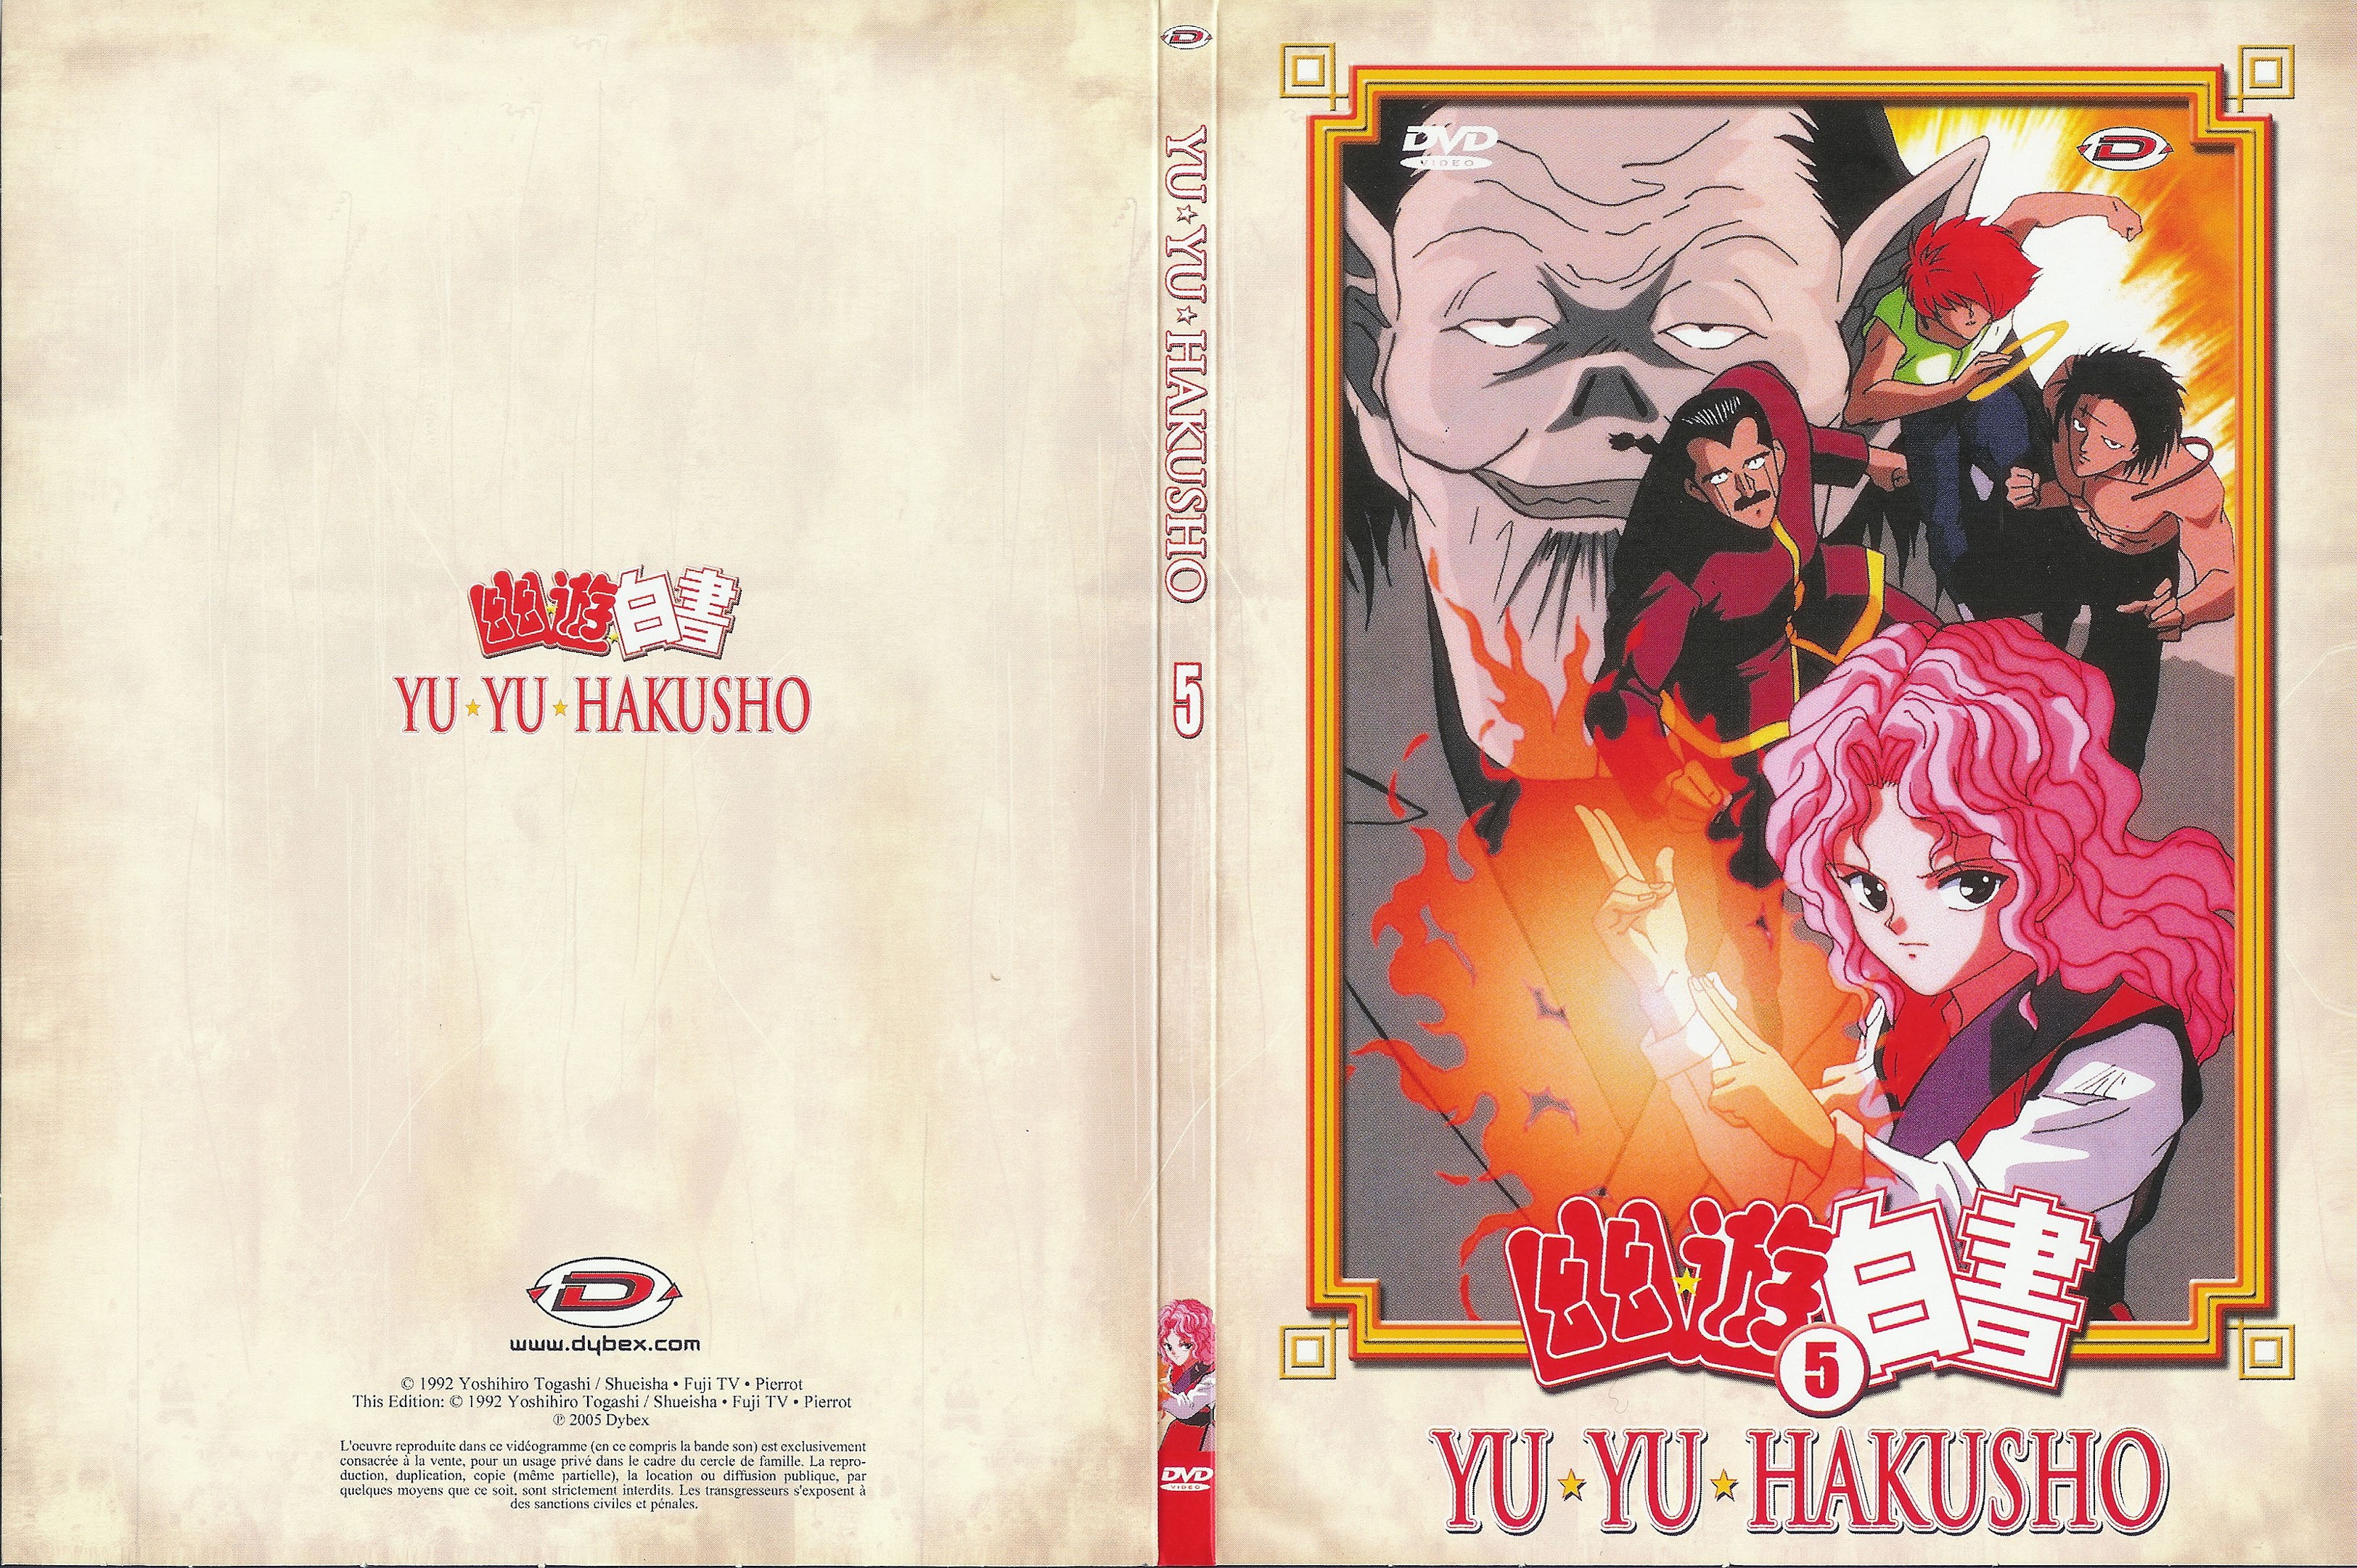 Jaquette DVD Yu yu hakusho vol 05